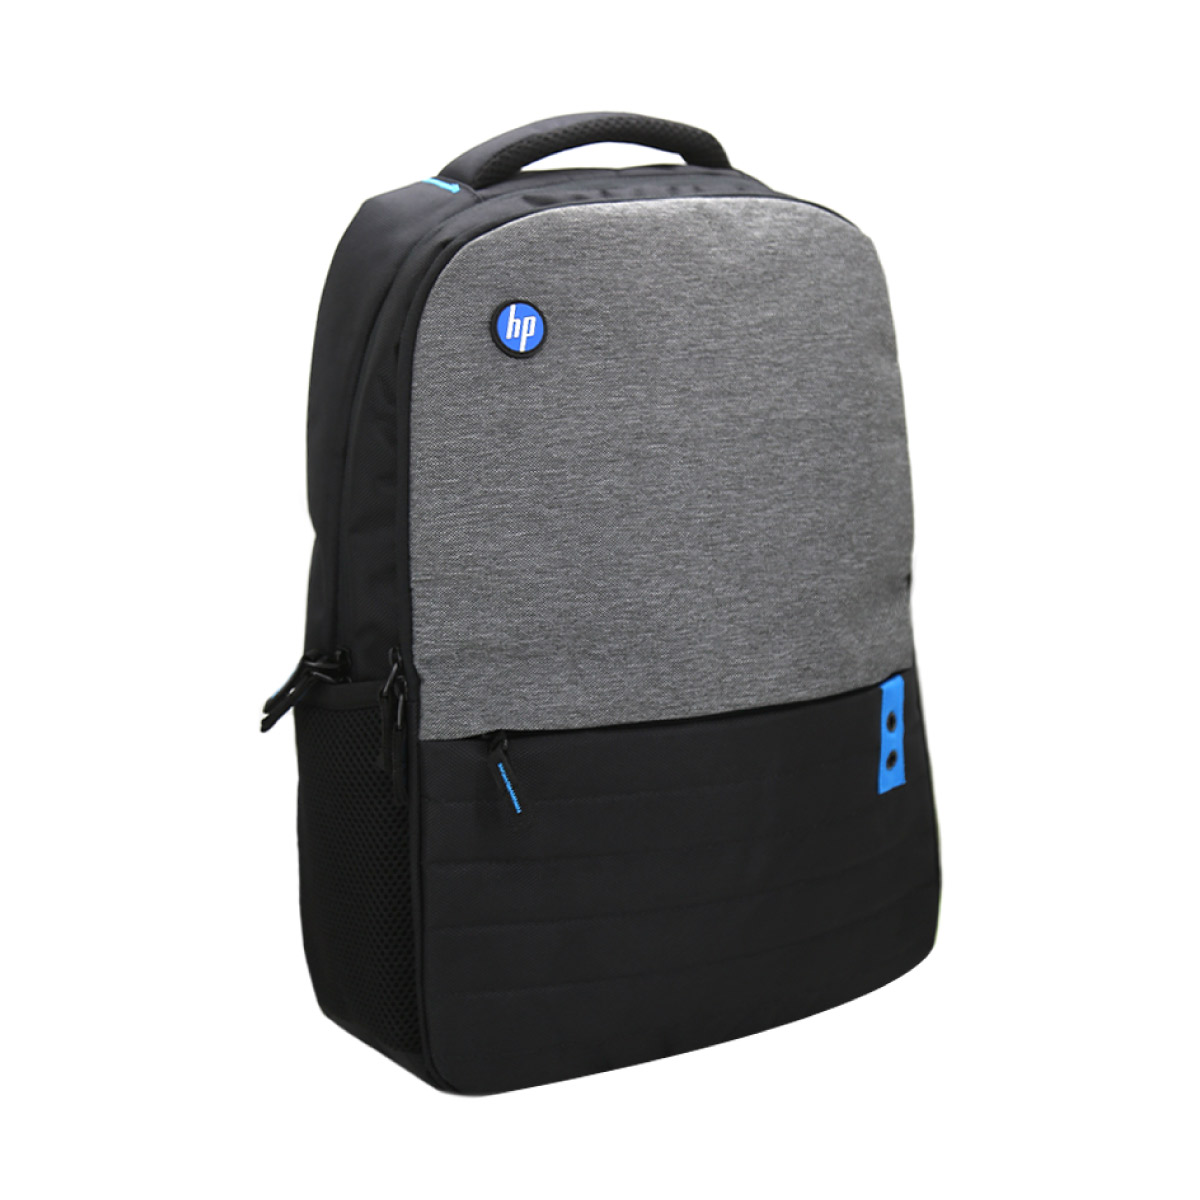 HP Laptop Bag Value Backpack 15-inch Laptop Sport | truongquoctesaigon ...